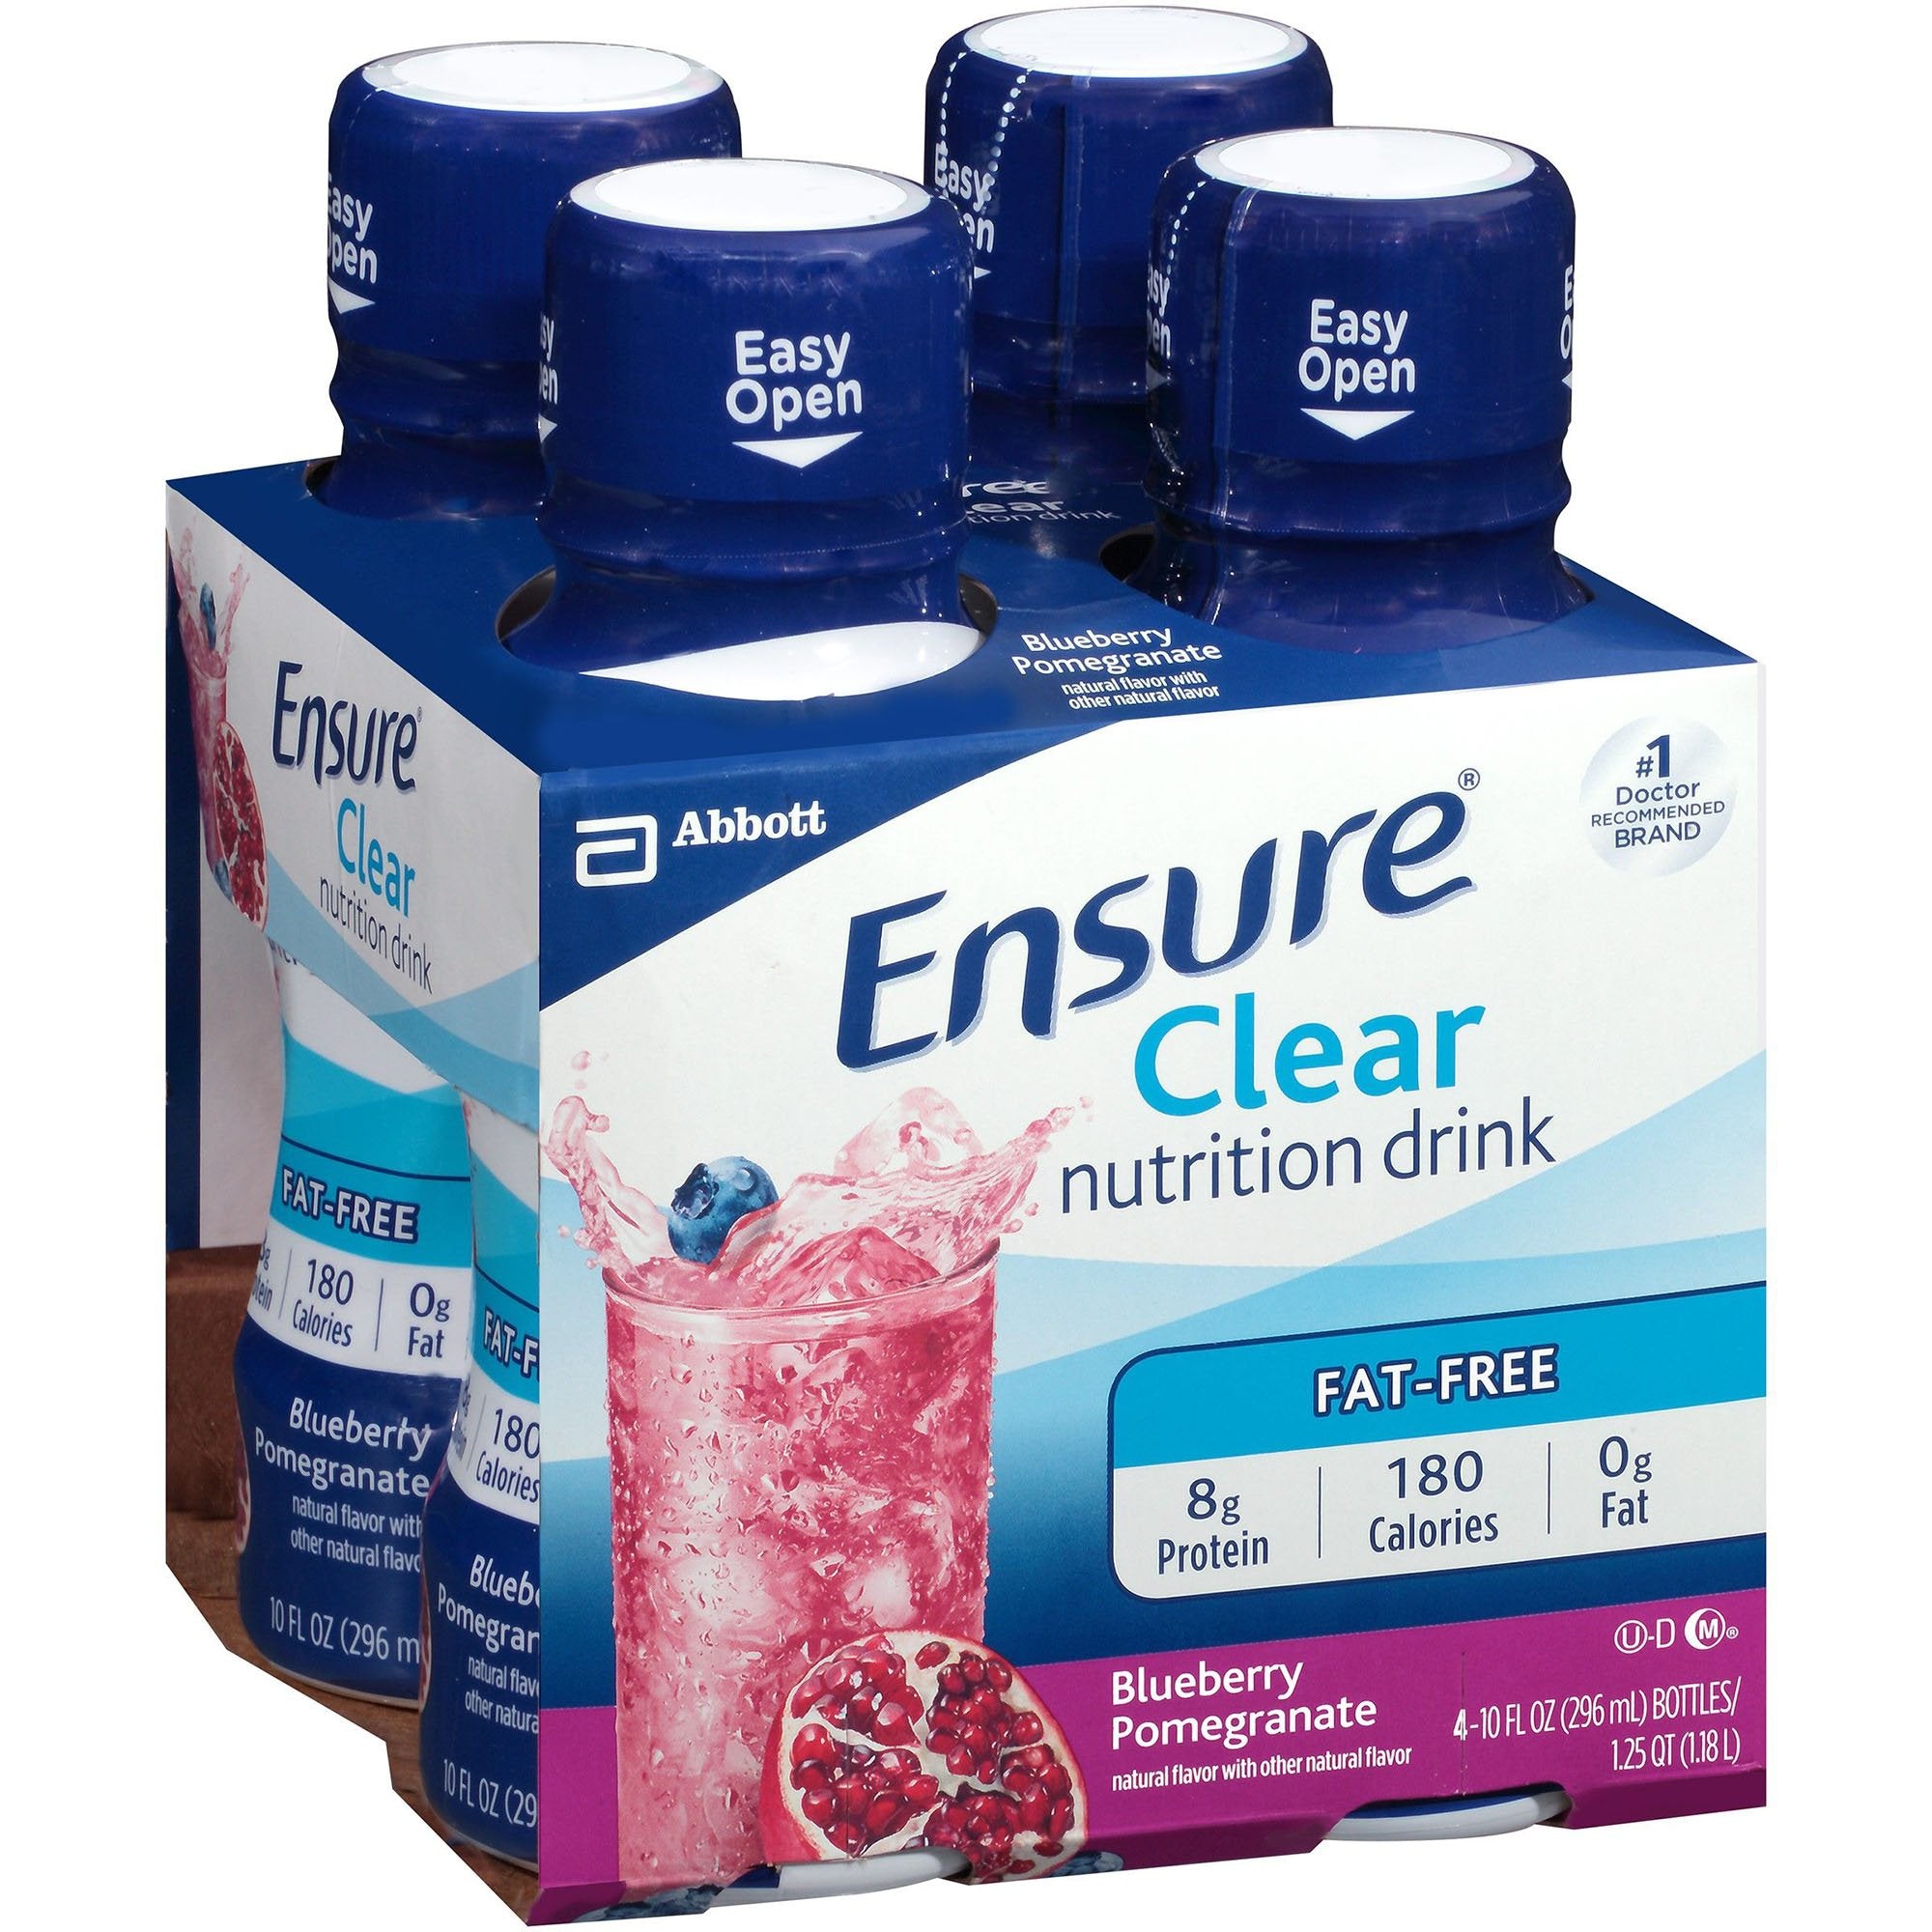 Ensure Clear Nutritional Drink Blueberry Pomegranate - 4 pk - 10 oz btl